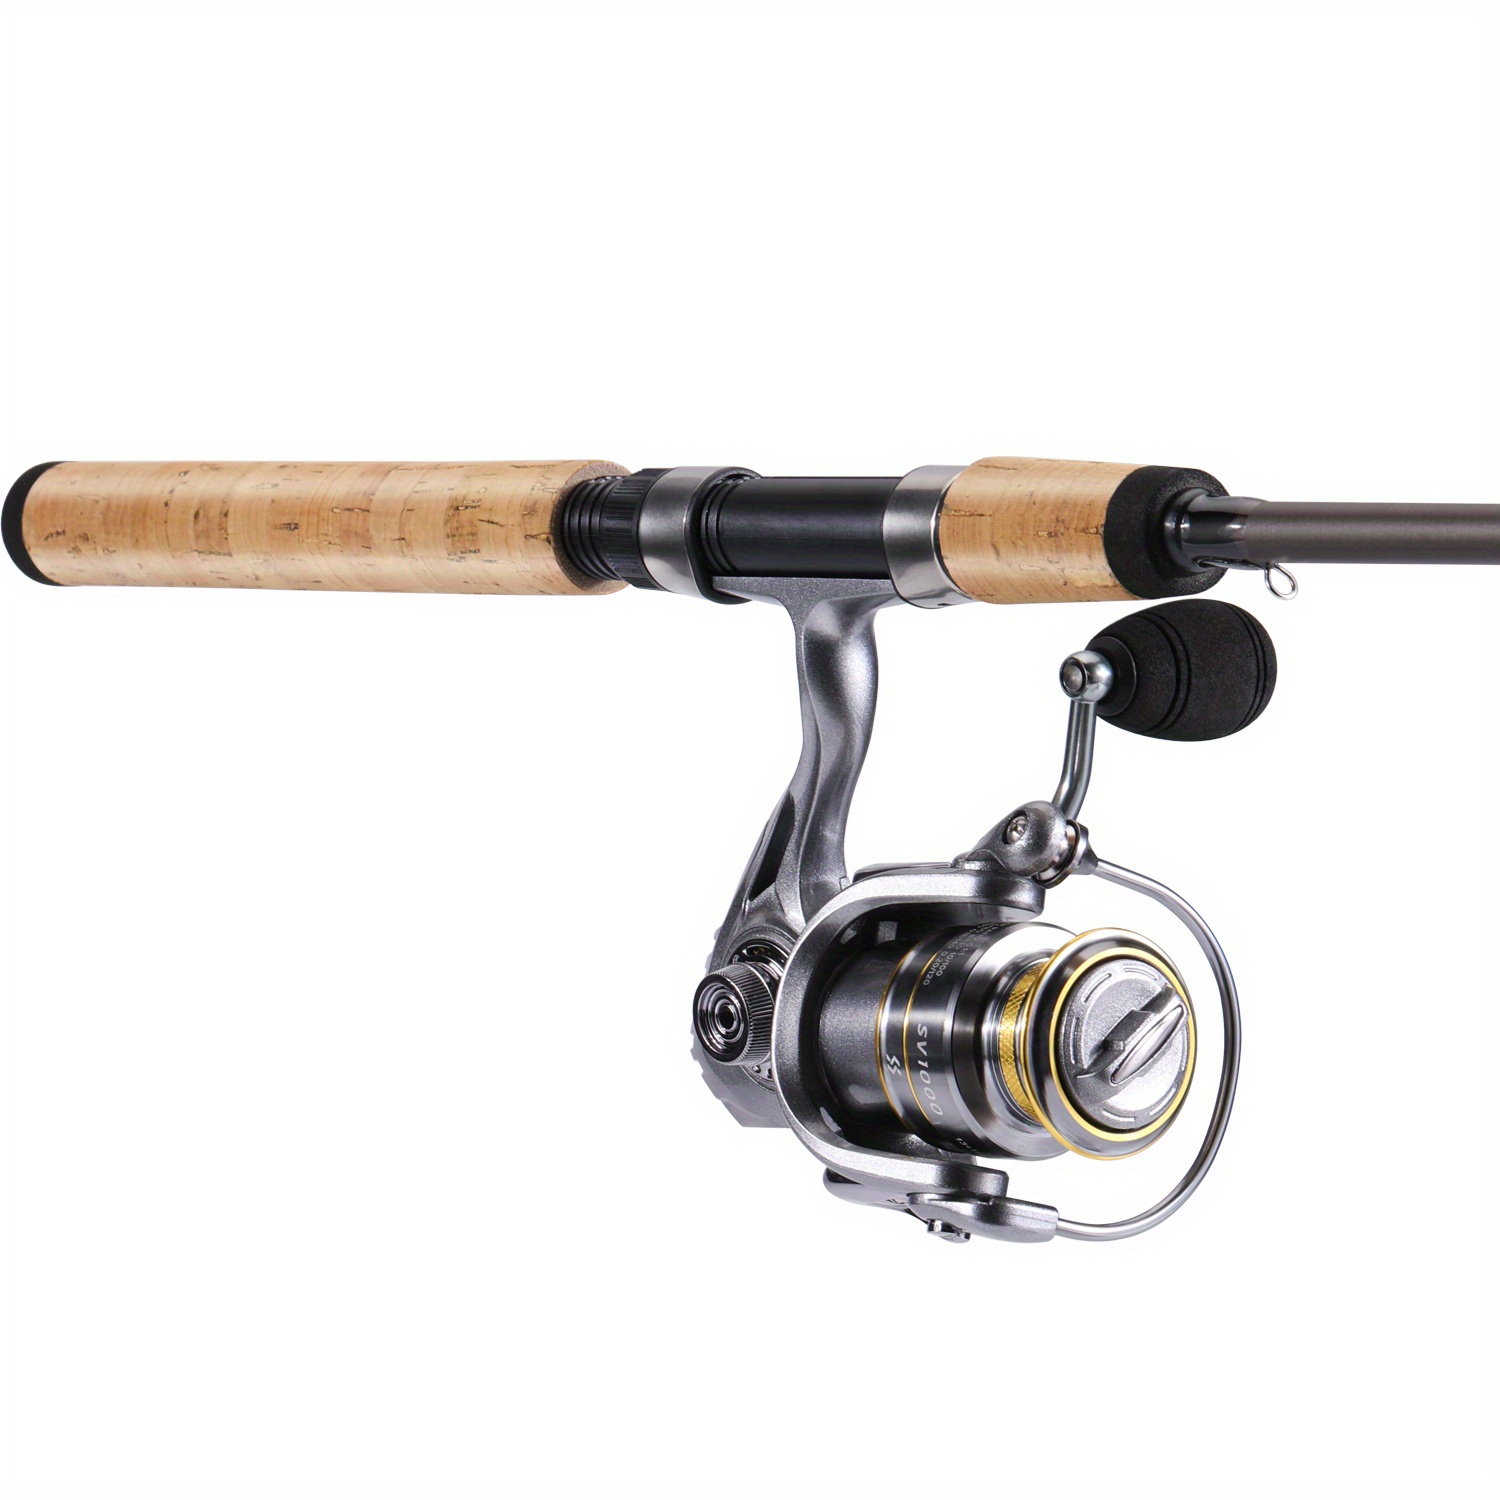 Fishing rod with reel set 2.1 meter Fiber fishing rod with wheel